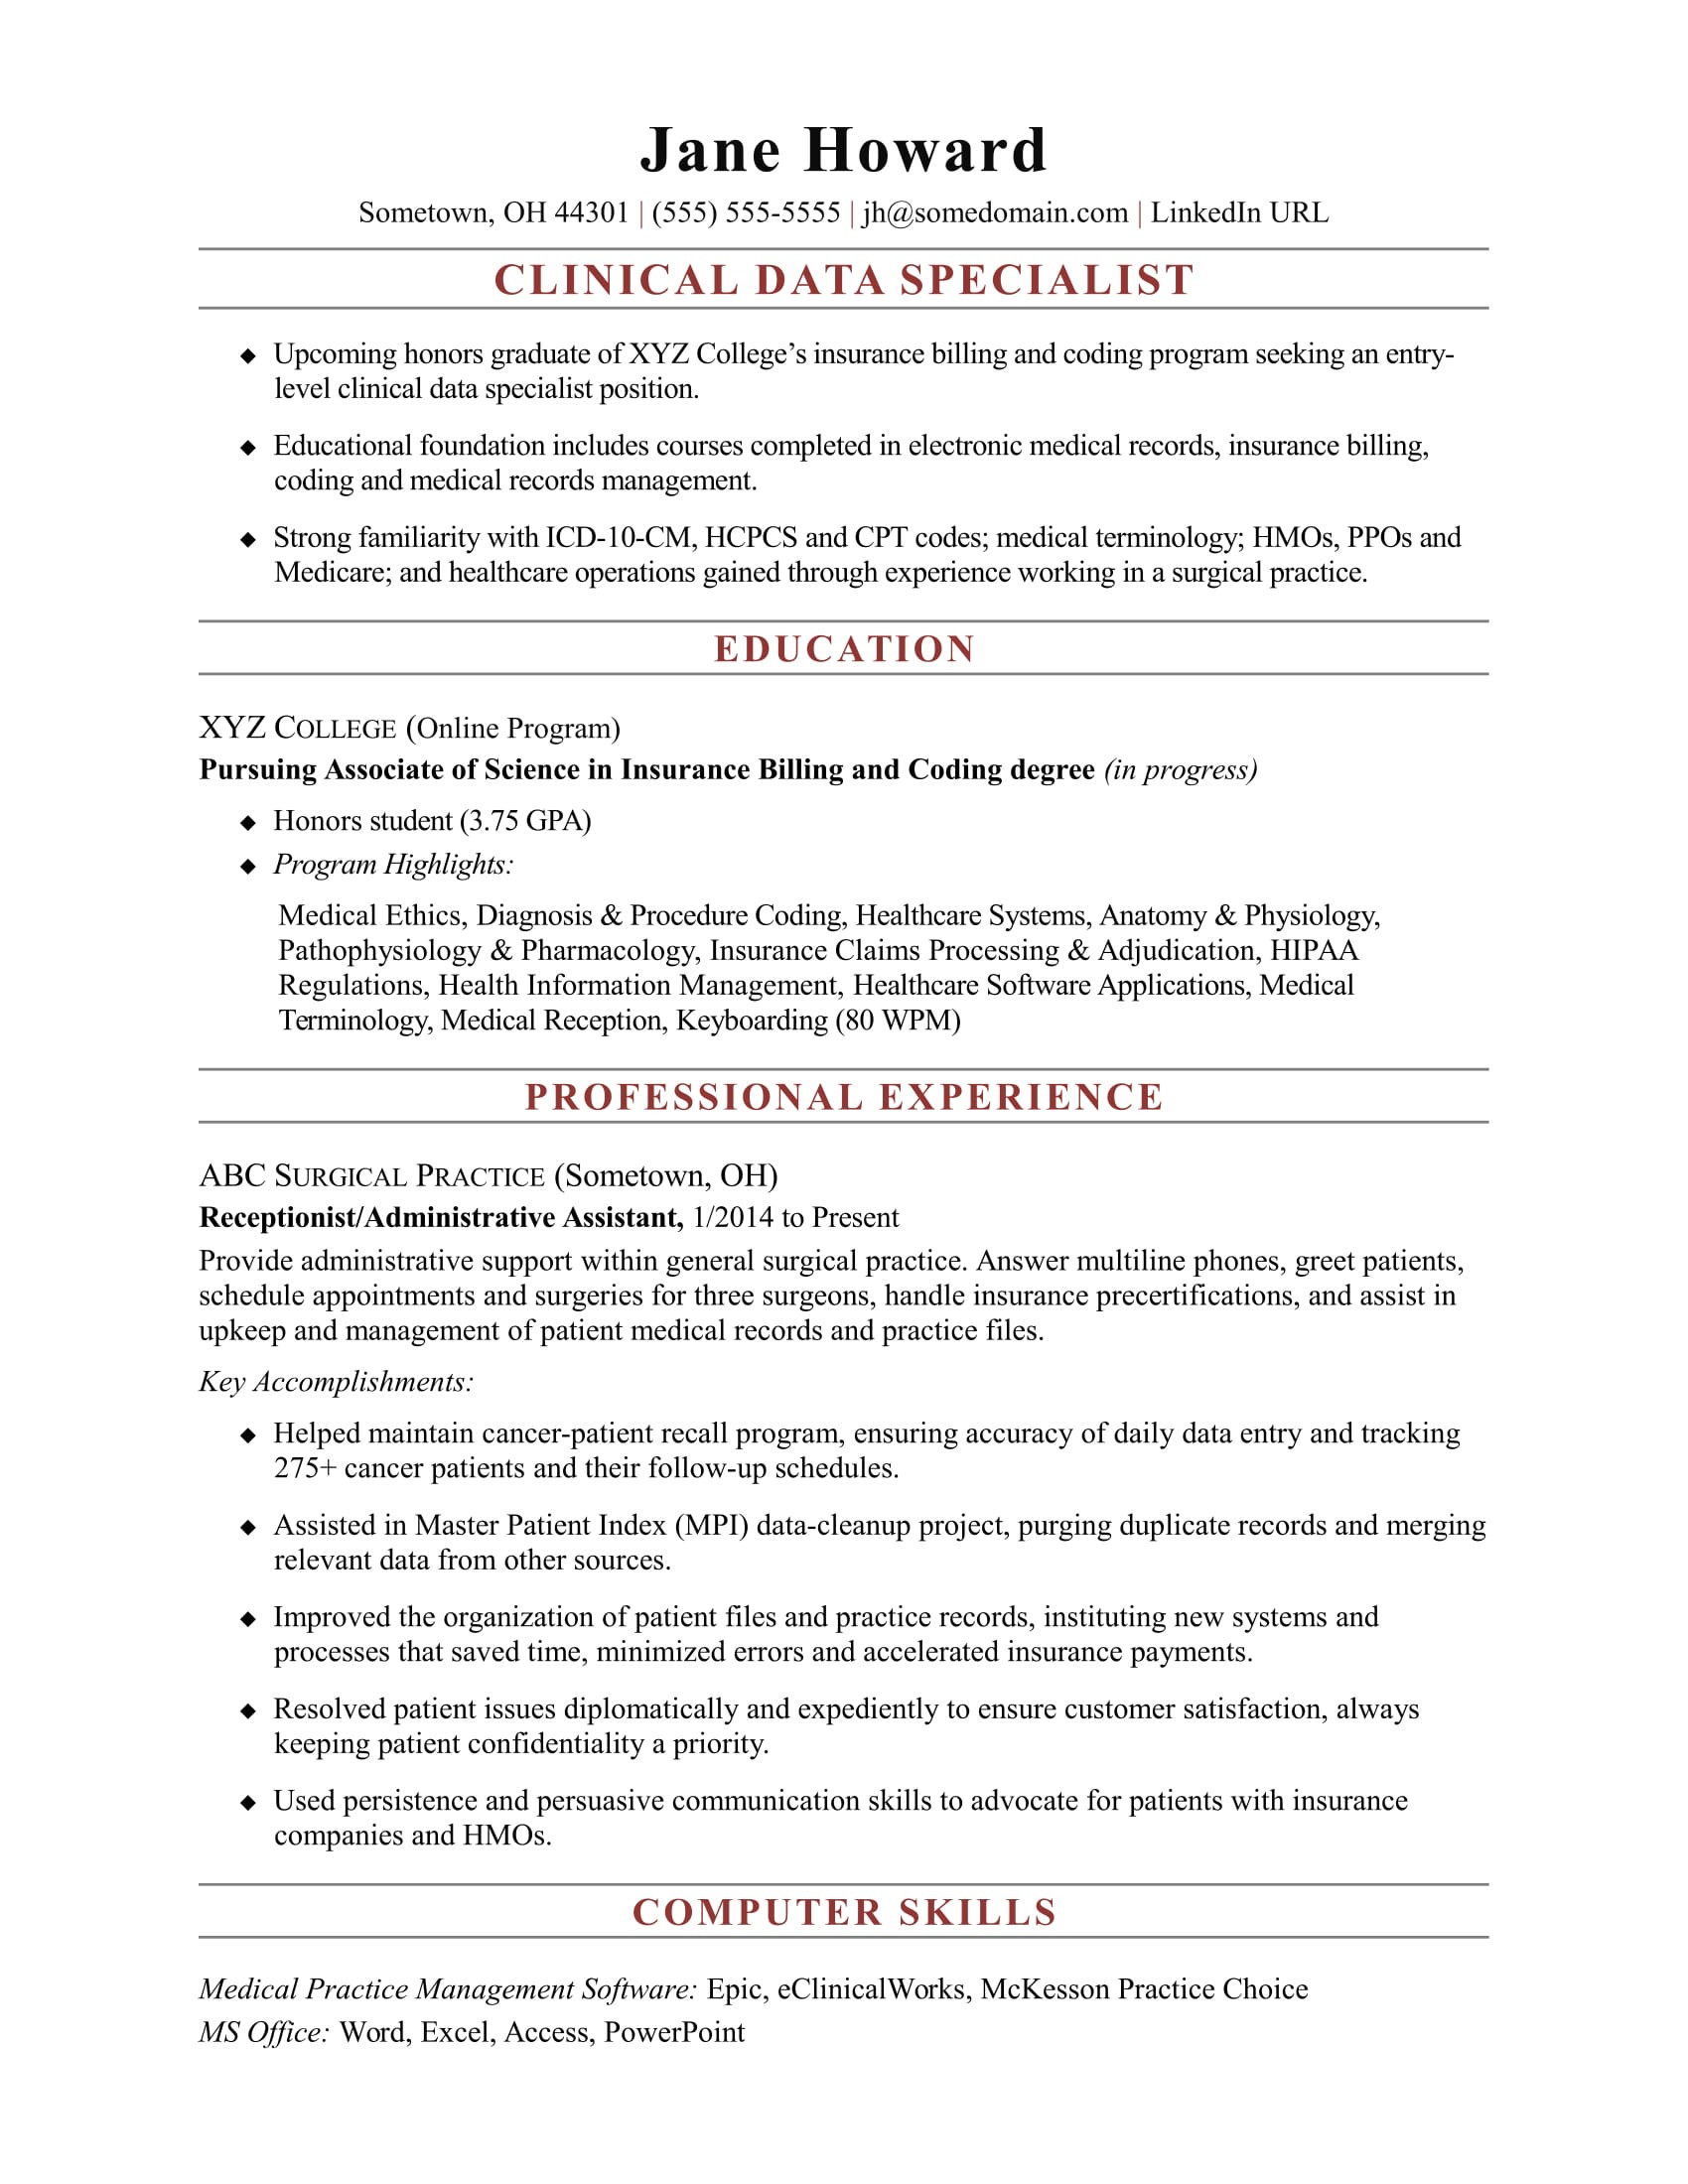 Entry Level Medical Billing and Coding Resume Sample Entry-level Clinical Data Specialist Resume Sample Monster.com